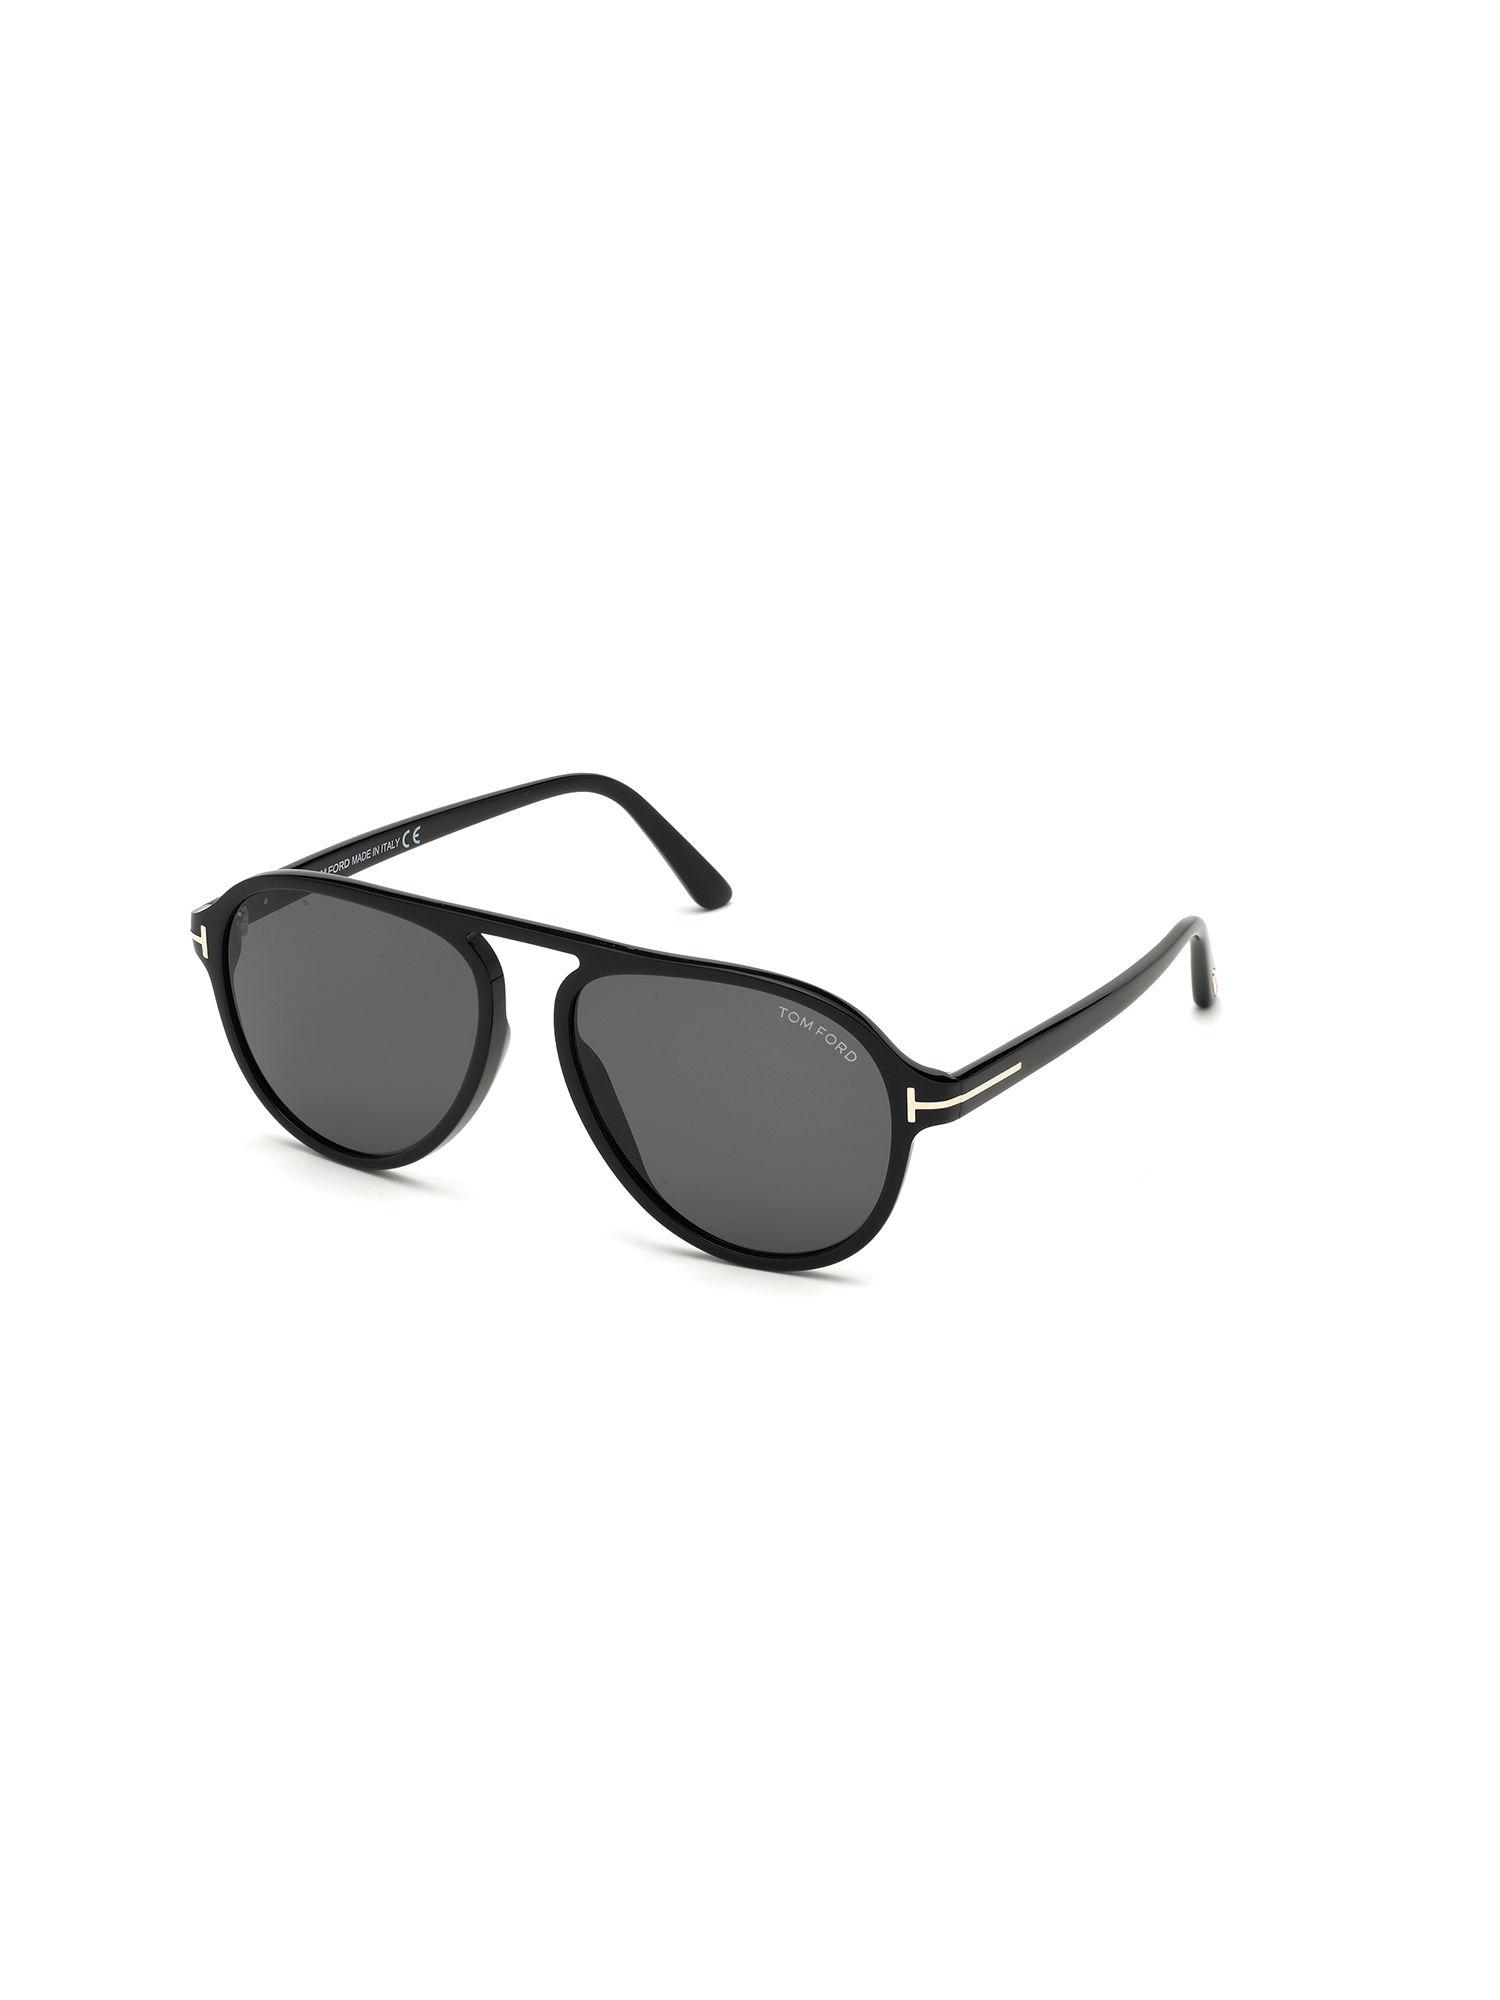 black-plastic-sunglasses-ft0756-57-01a